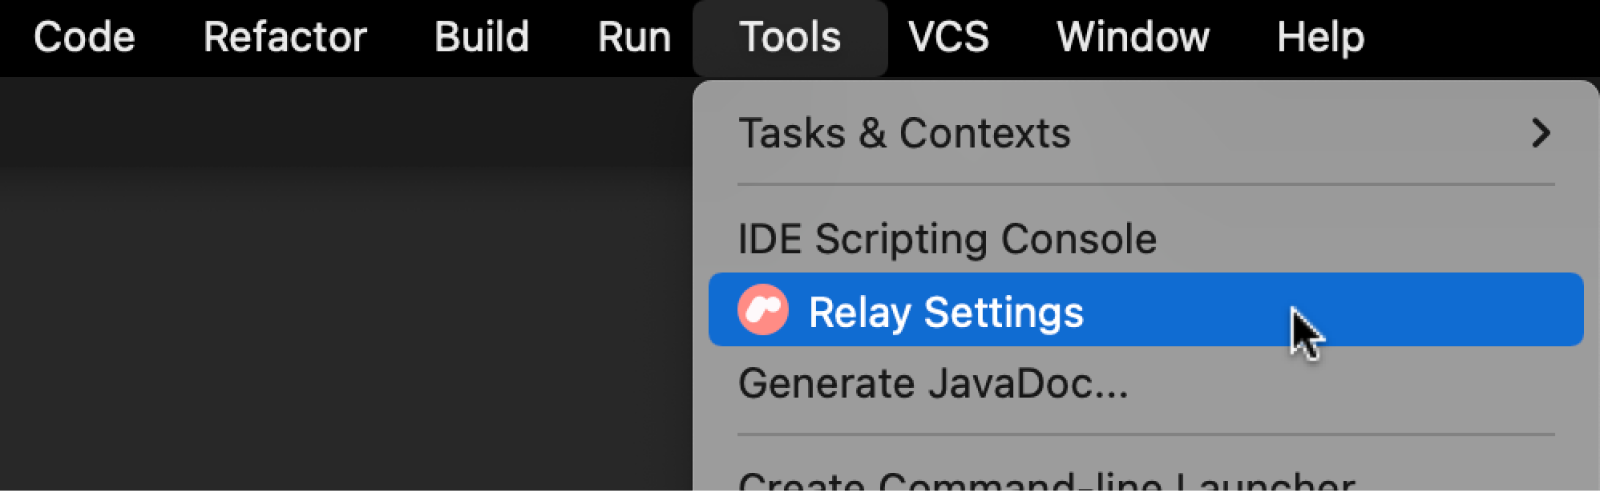 Relay settings menu option under Tools to setup Figma access token